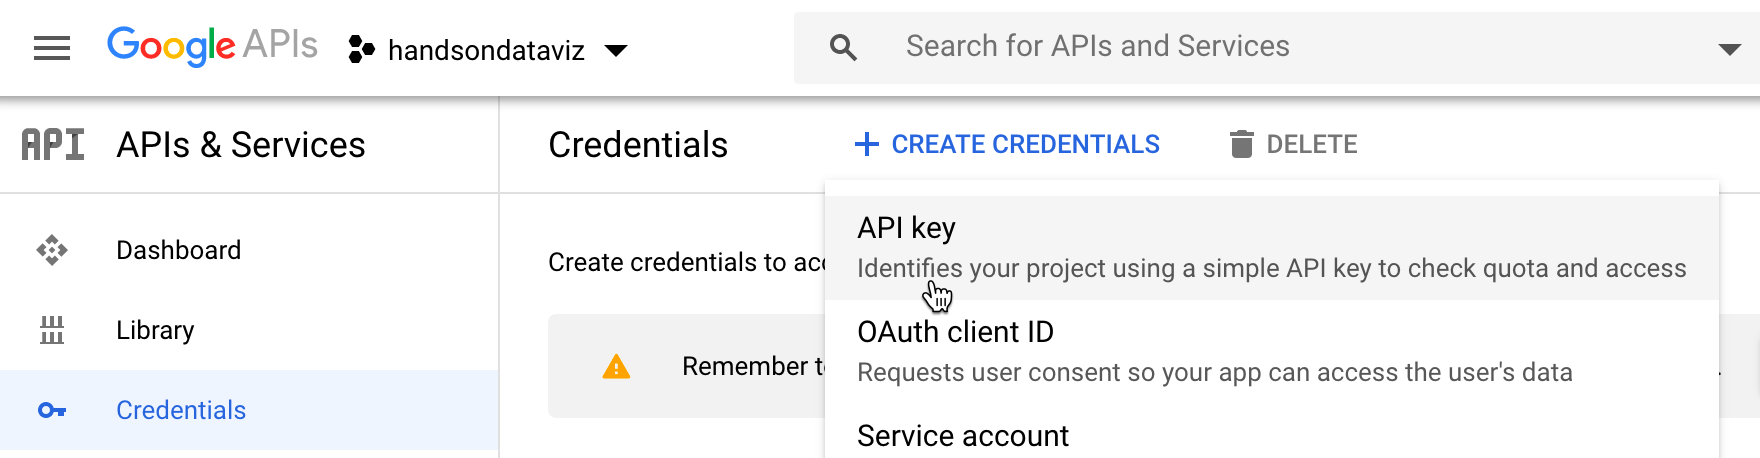 Select Credentials - Create Credentials - API key.